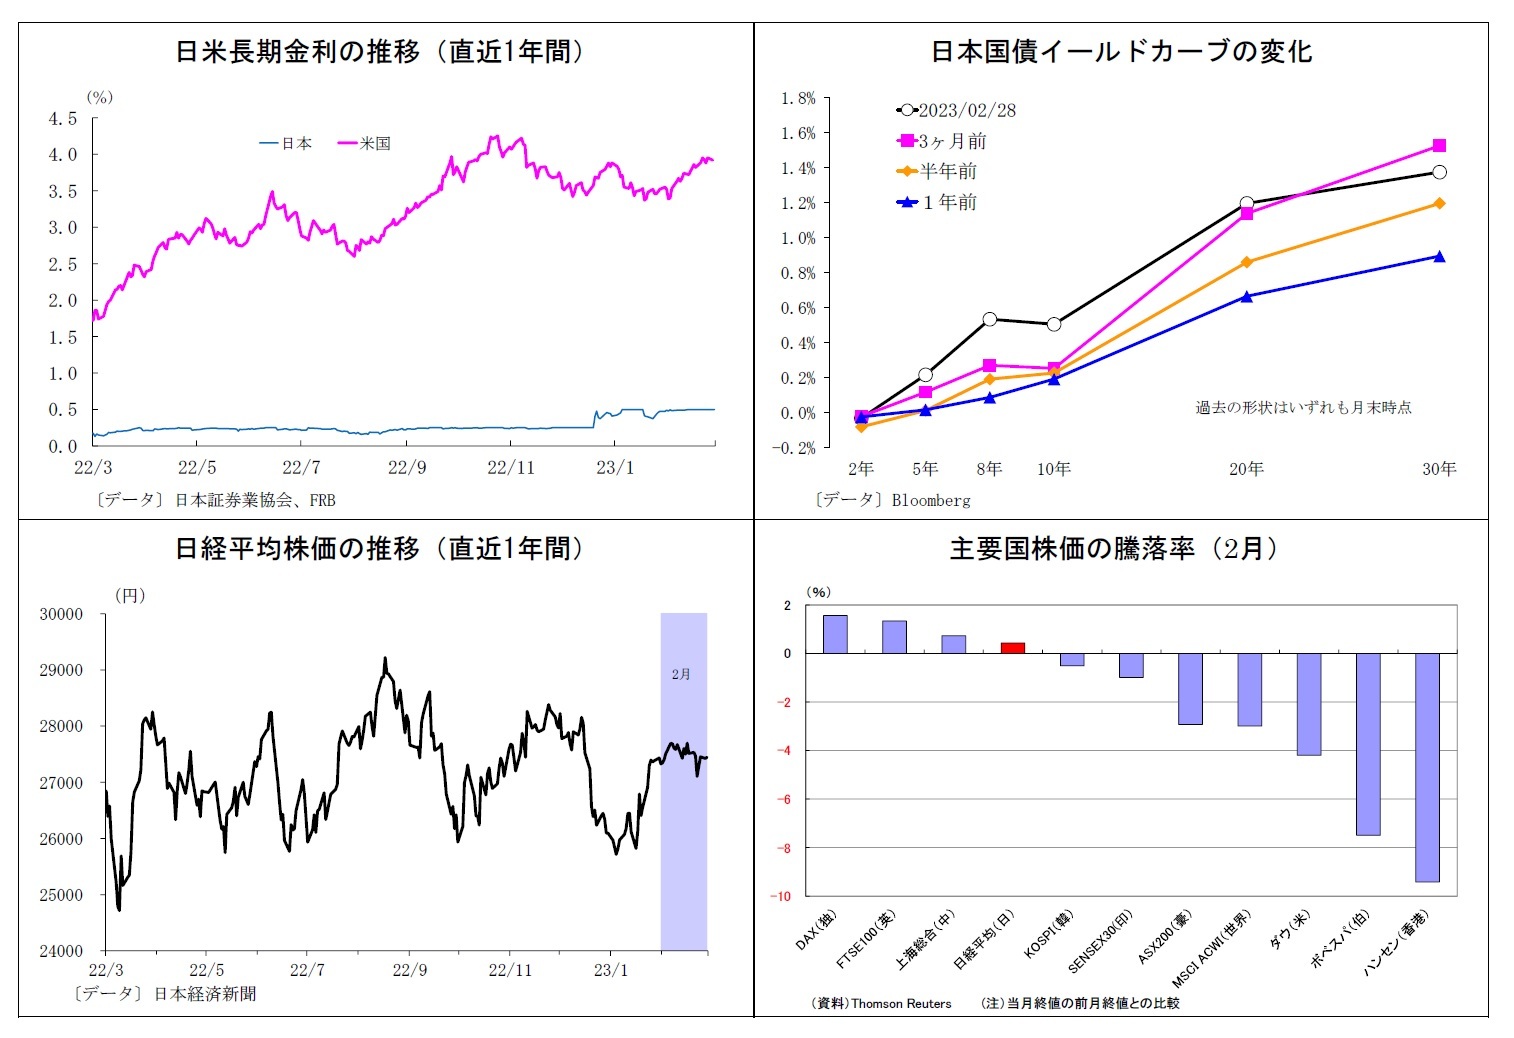 日米長期金利の推移（直近1年間）/日本国債イールドカーブの変化/日経平均株価の推移（直近1年間）/主要国株価の騰落率（2月）